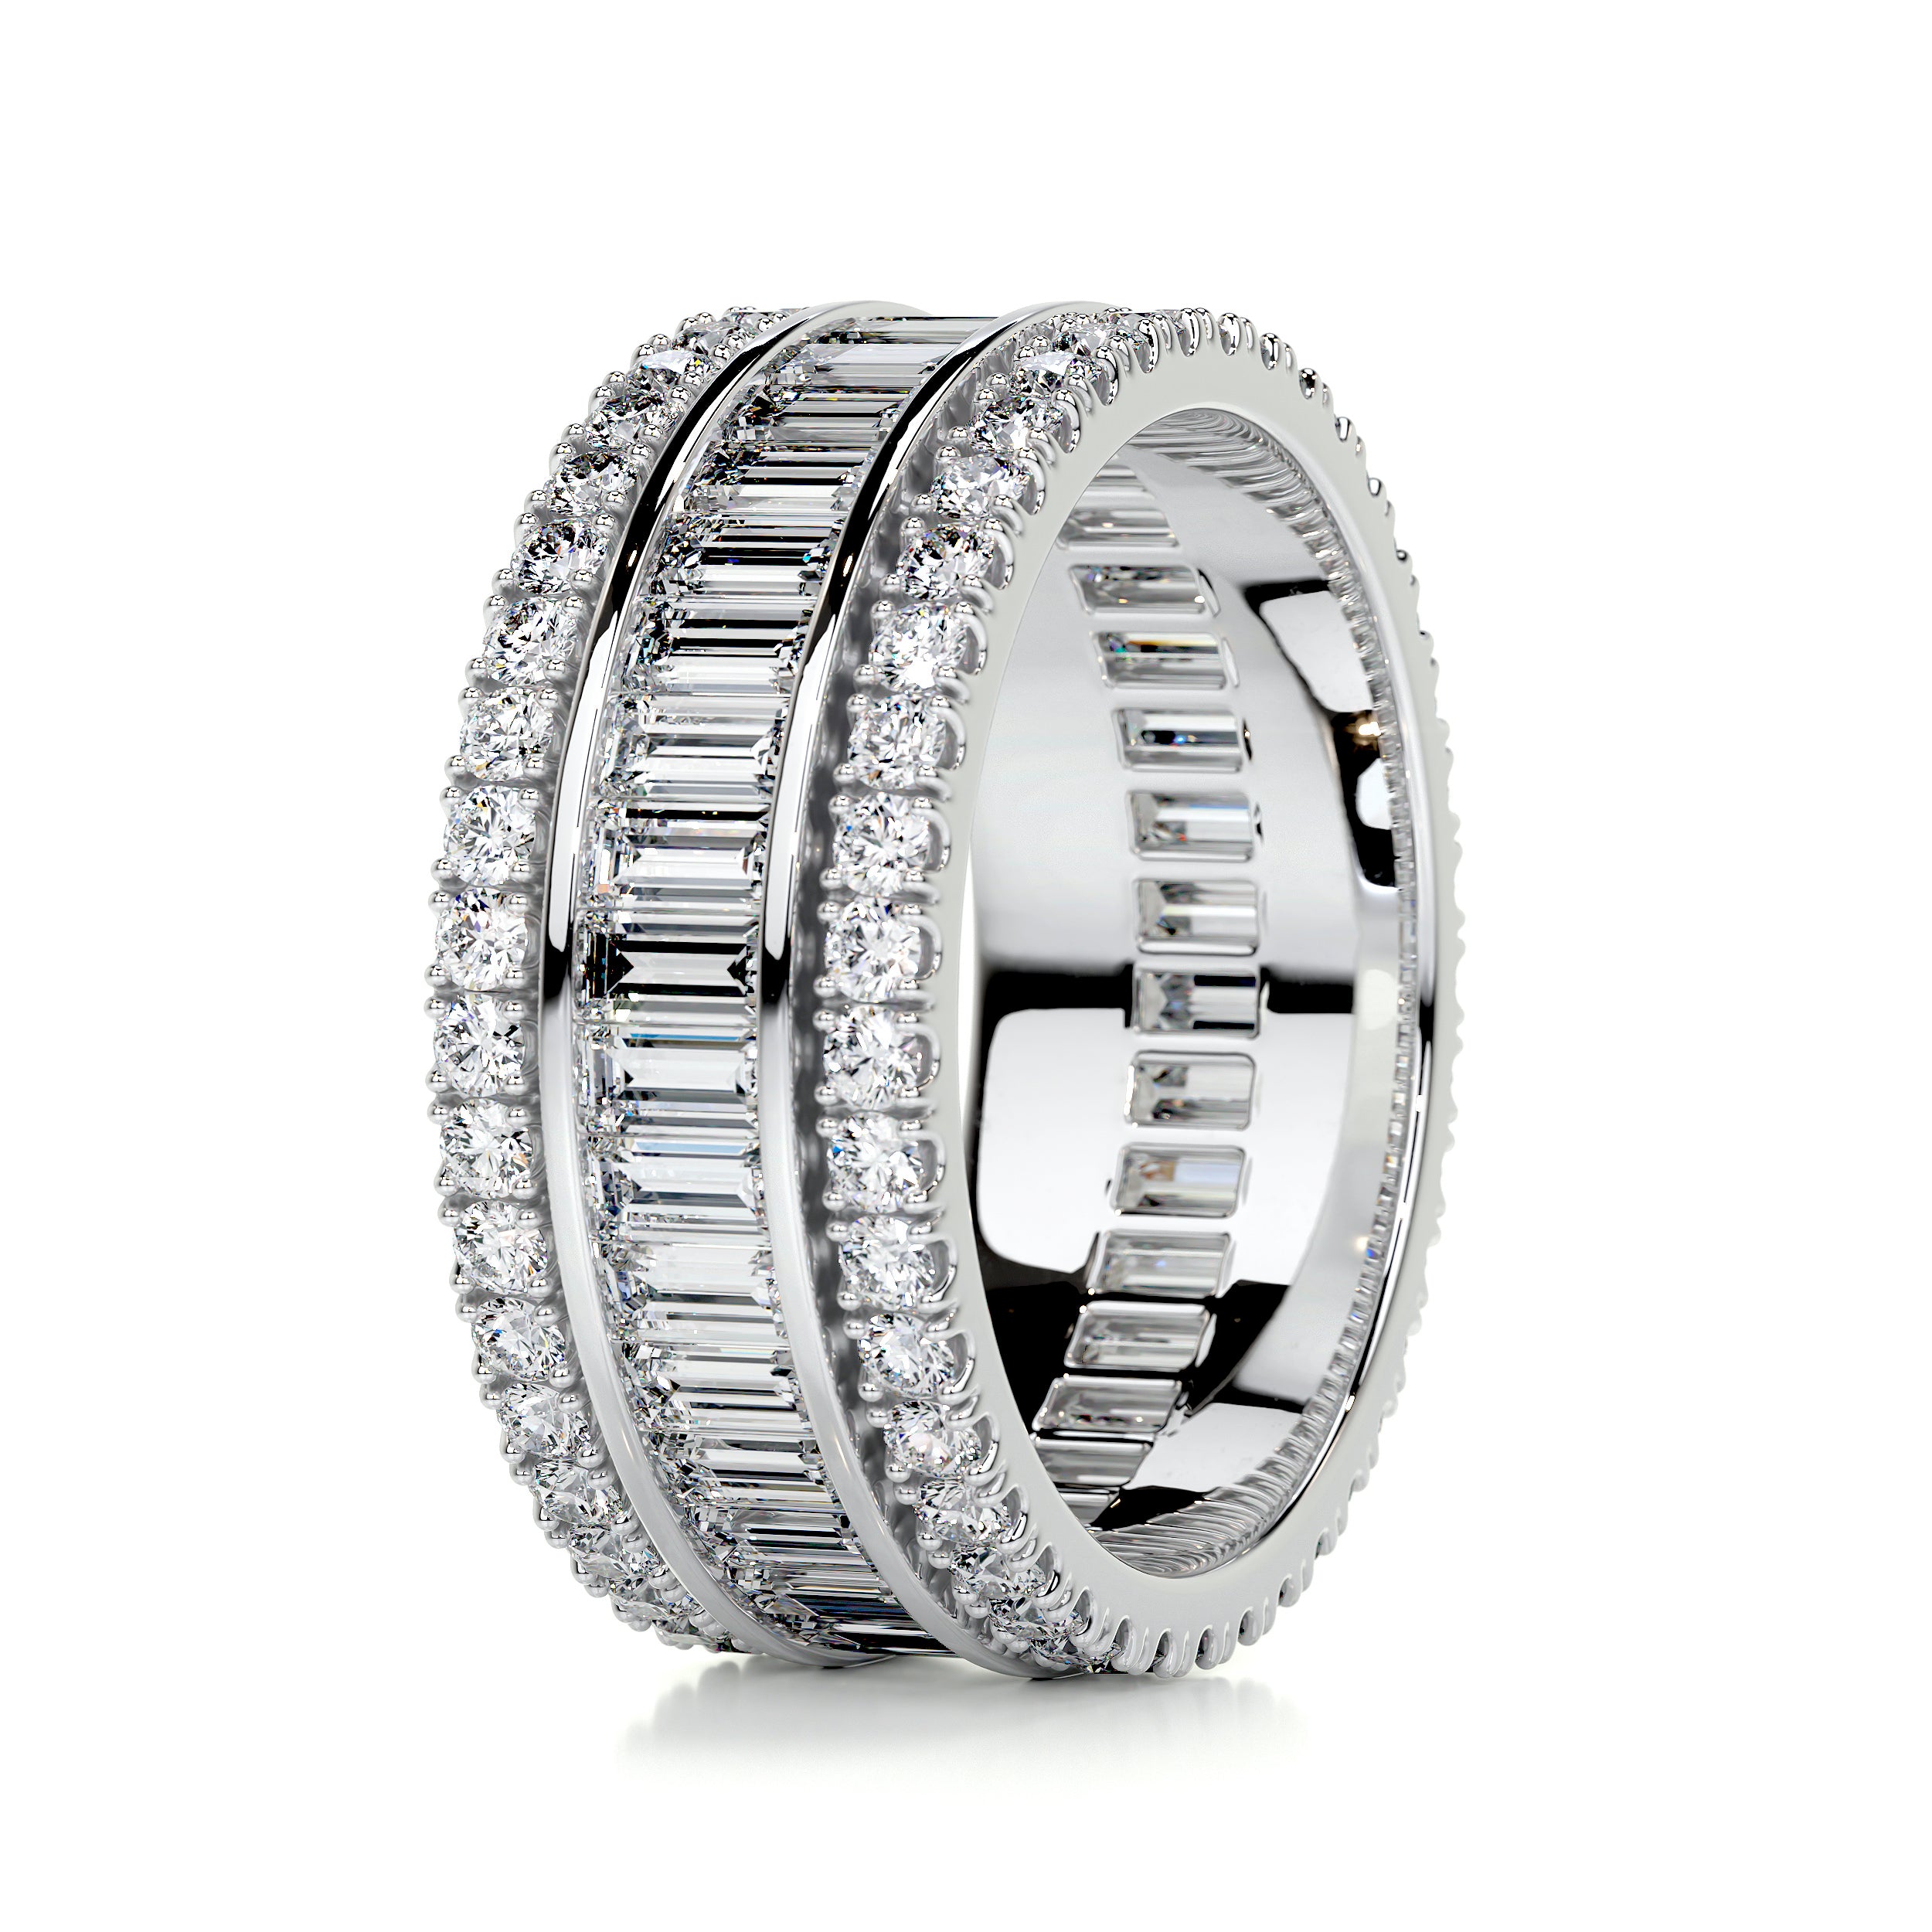 Paige Eternity Wedding Ring   (4 Carat) -14K White Gold